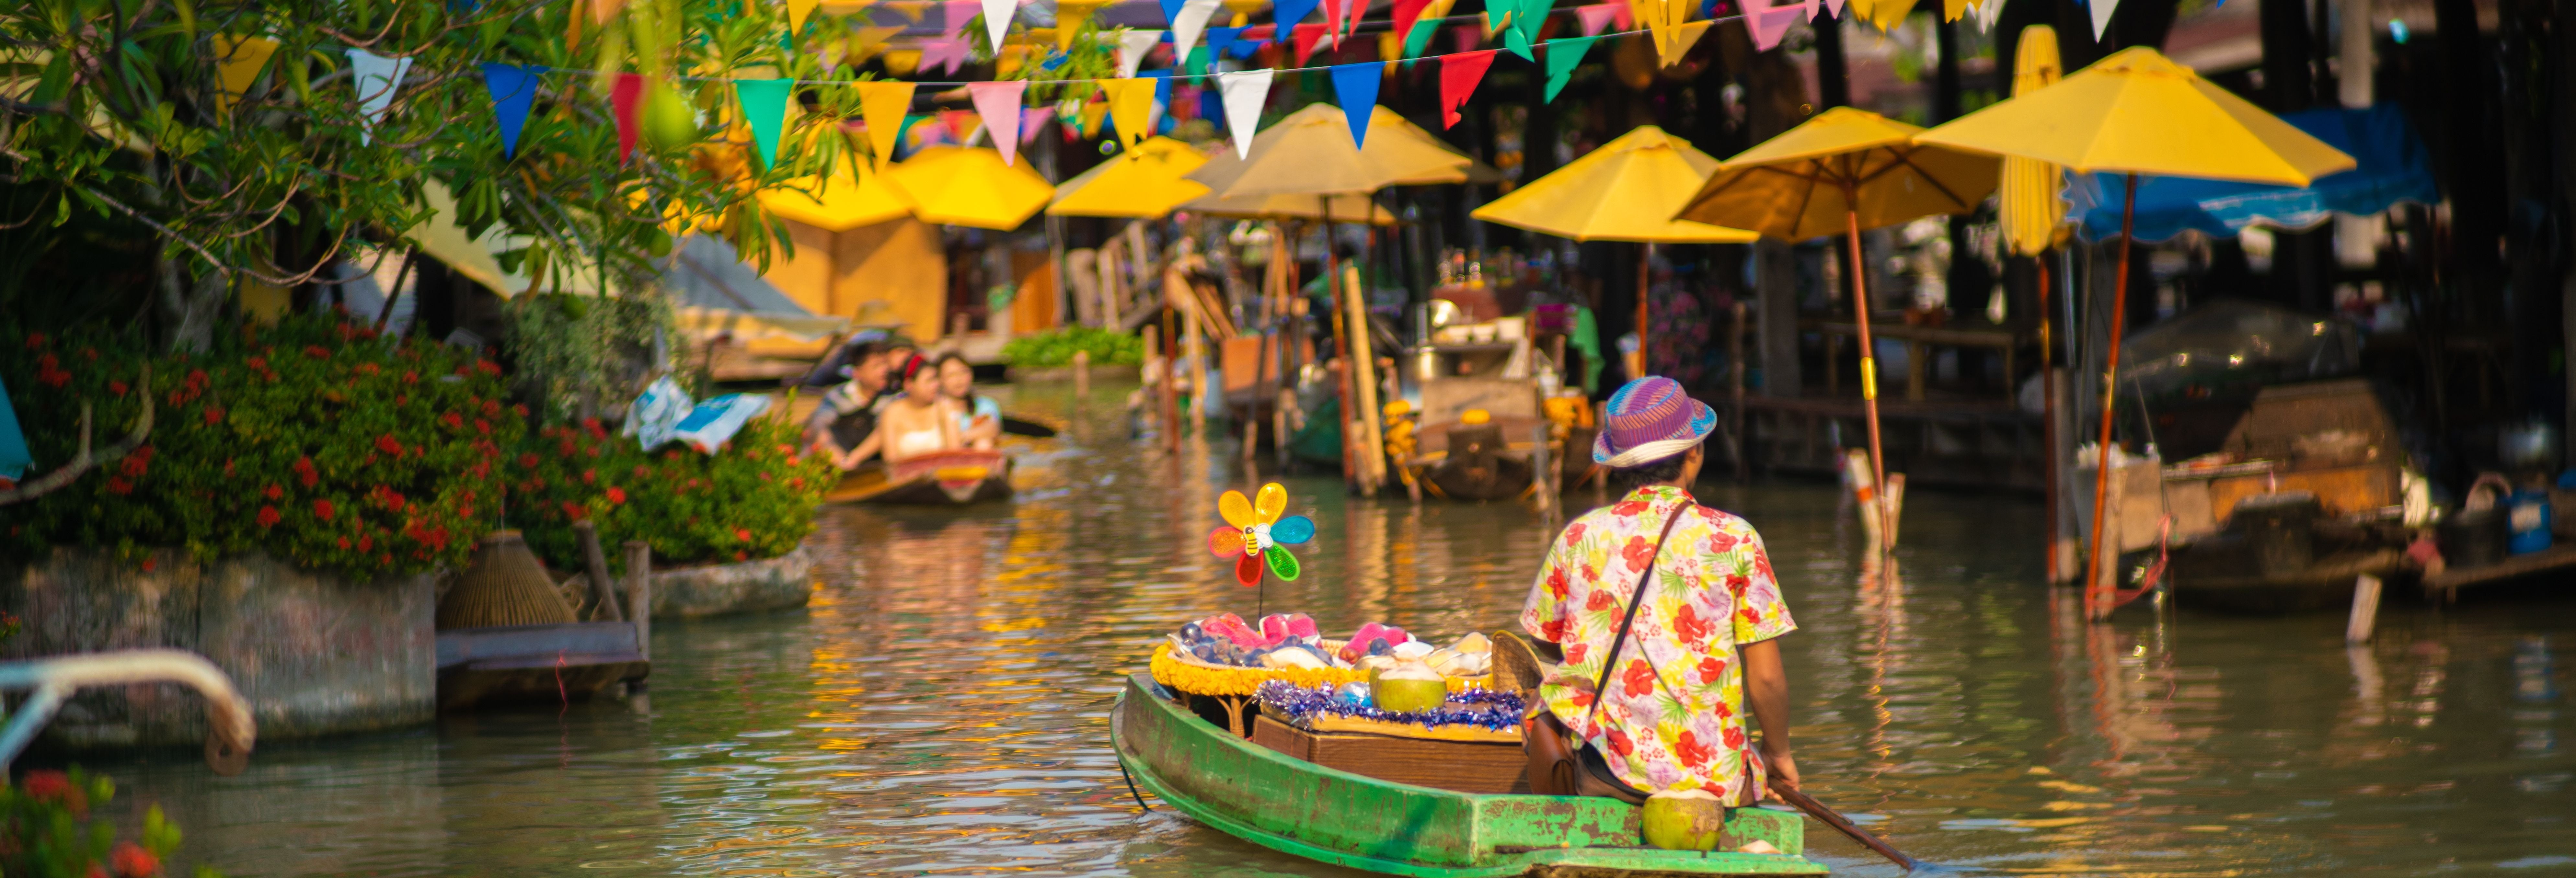 Tour pelo mercado flutuante de Pattaya + Passeio de barco